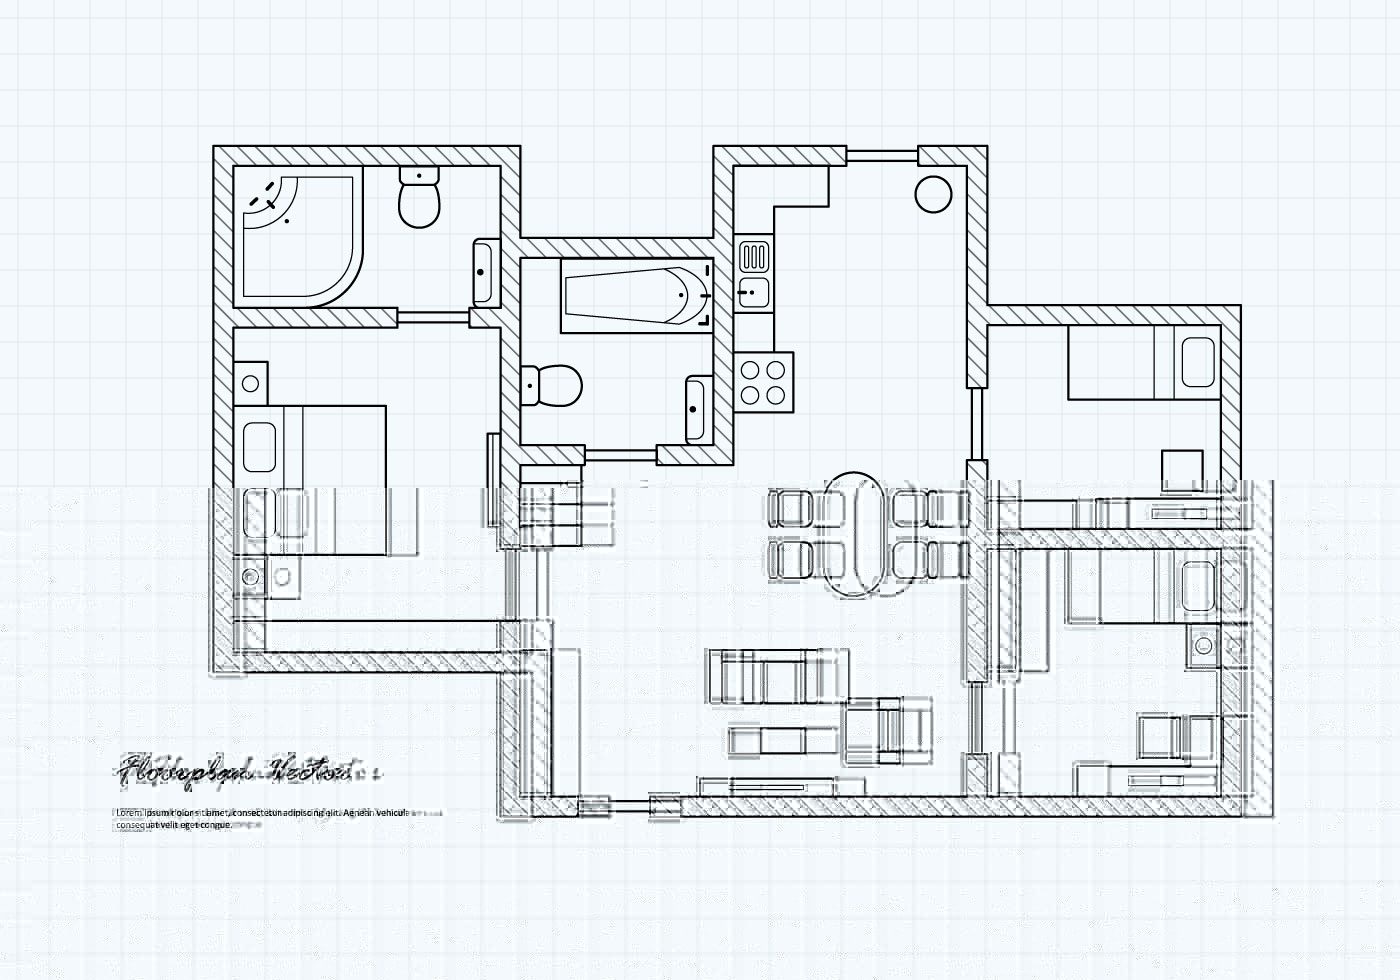 Floorplan Of A House Vector Download Free Vector Art